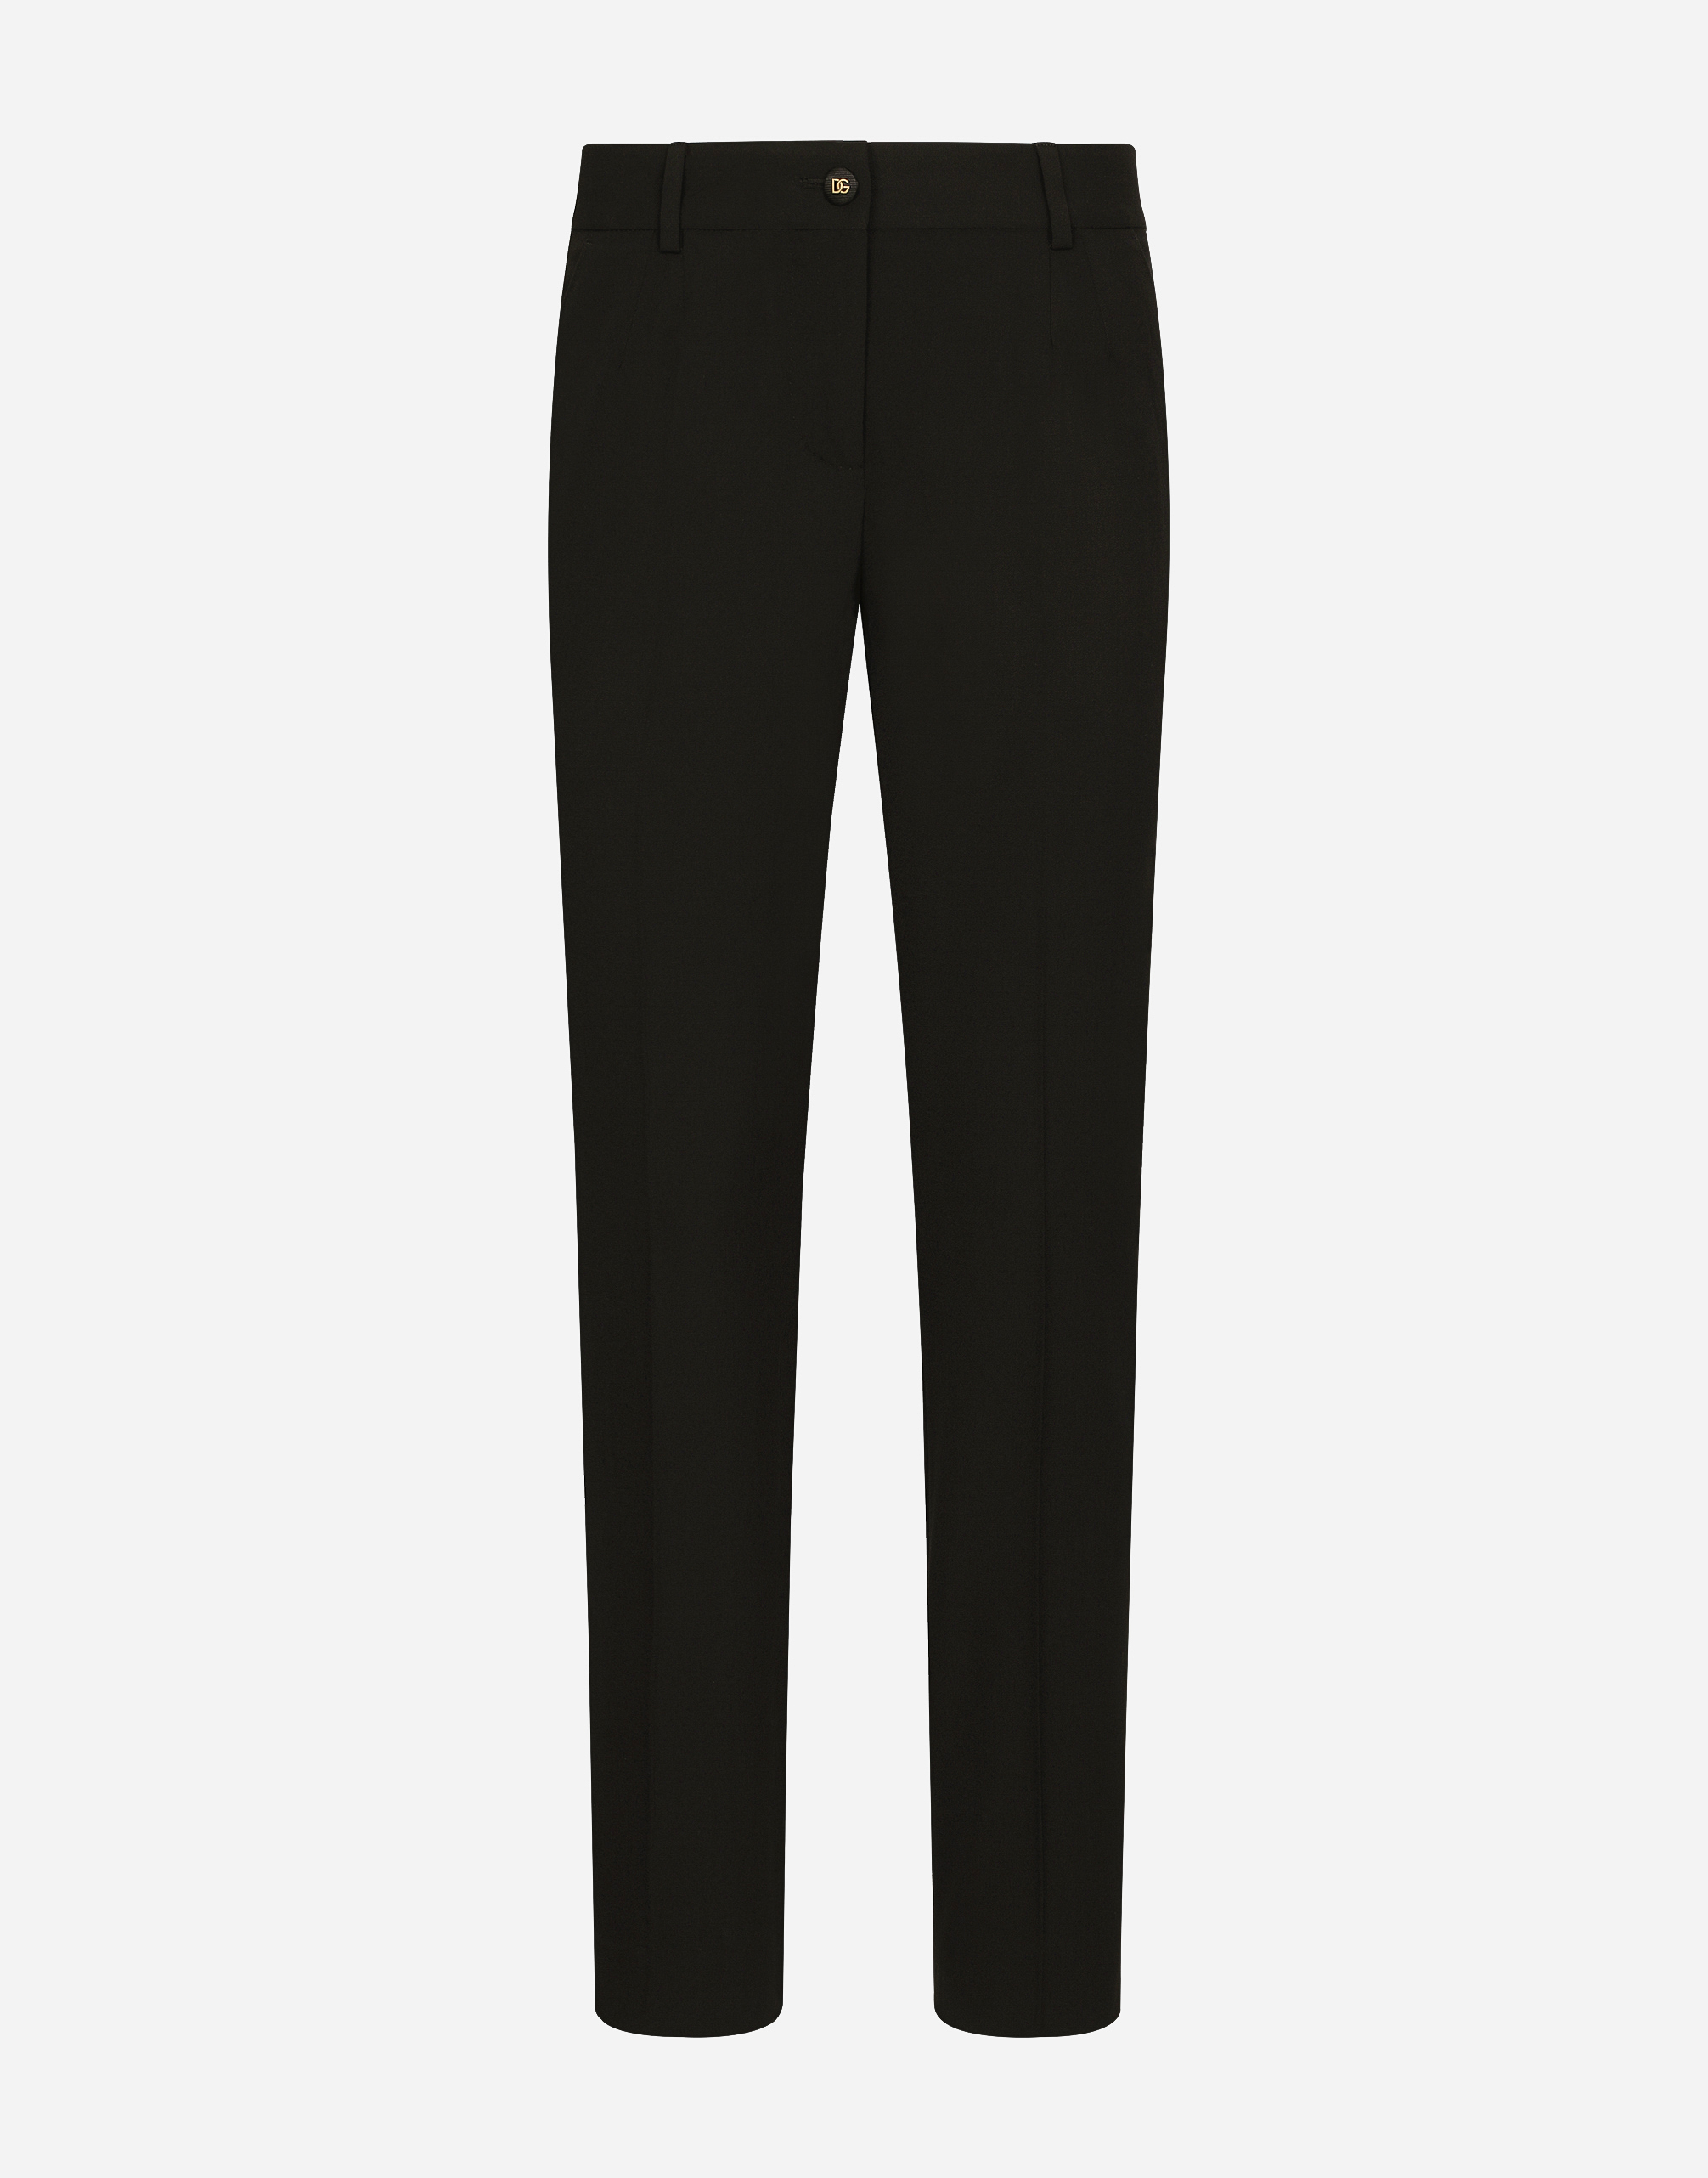 GARGOYLE BELLS 【2Pack】 Black Cotton Underwear with Words for Women Ladies  Panties Boy Shorts (as1, alpha, s, regular, regular, 2Pack-A) at   Women's Clothing store